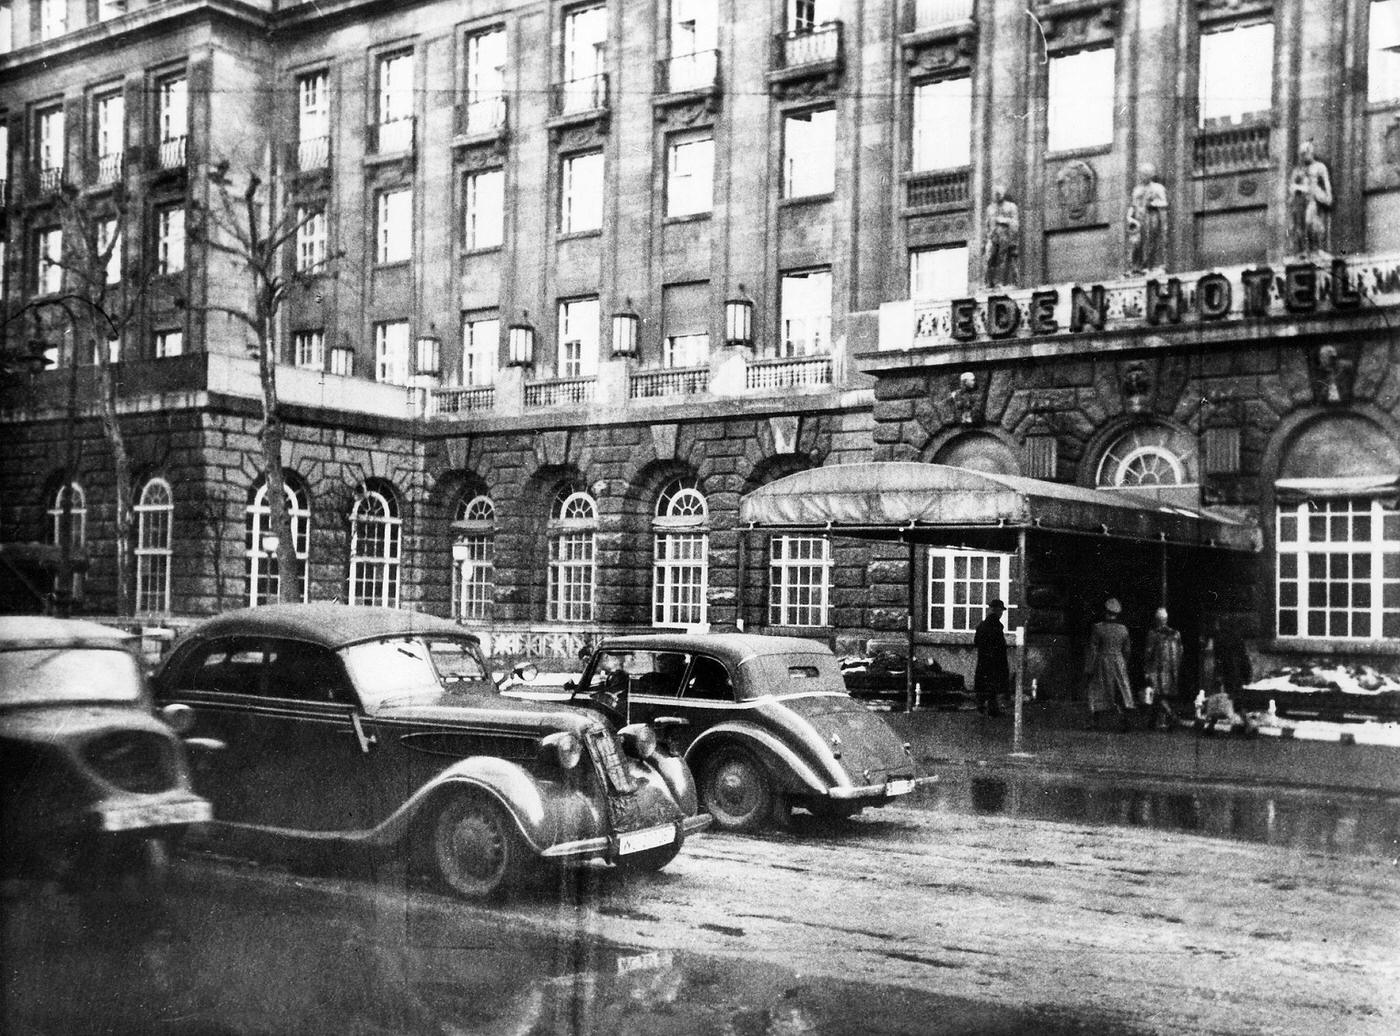 Hotel Eden in the Budapester Strasse, Berlin, 1930s